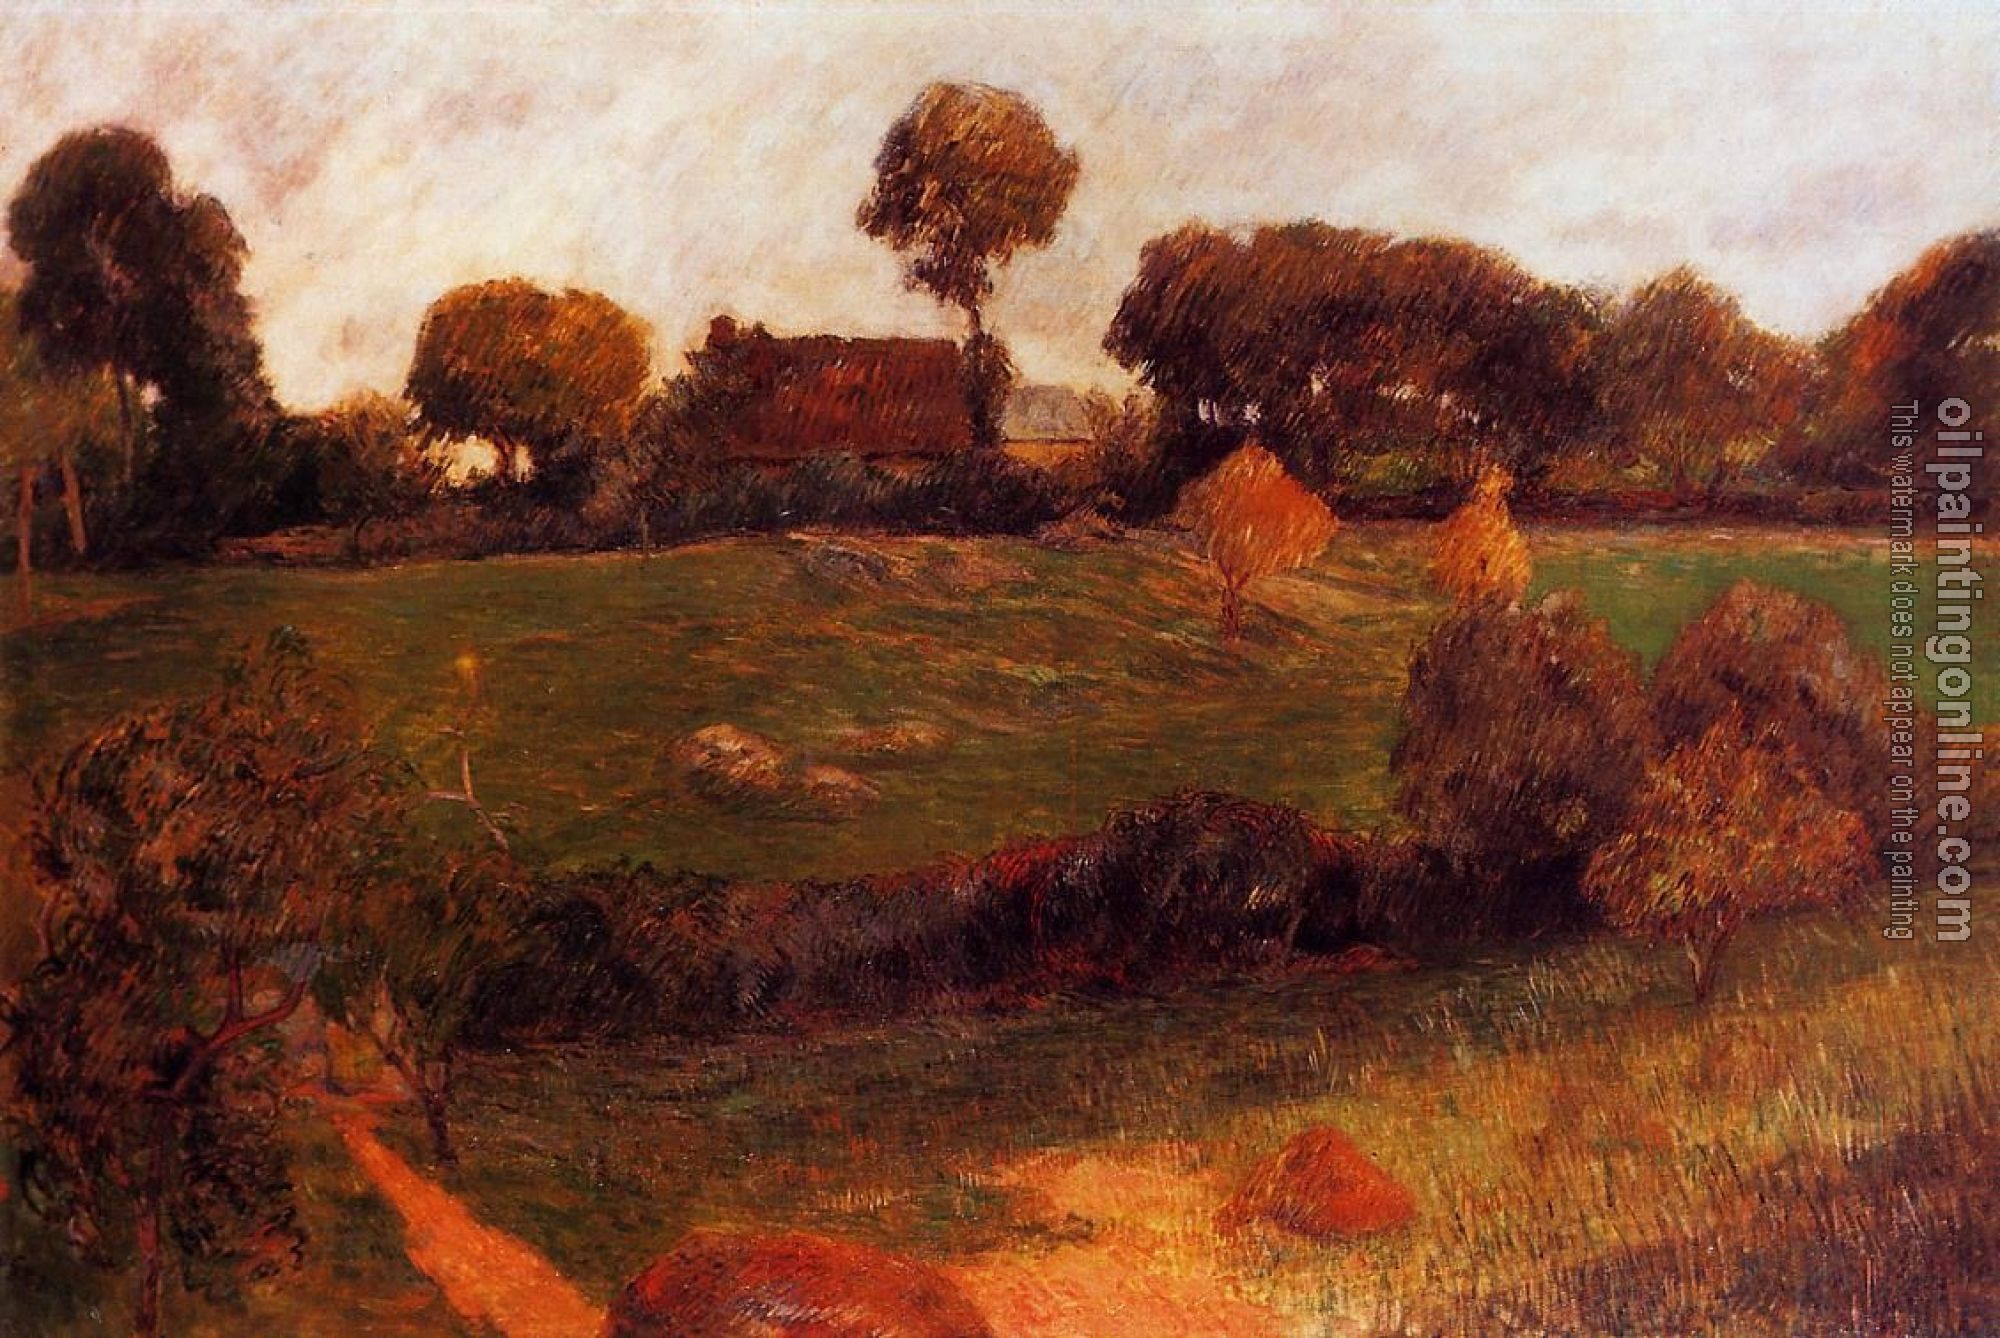 Gauguin, Paul - Farm in Brittany